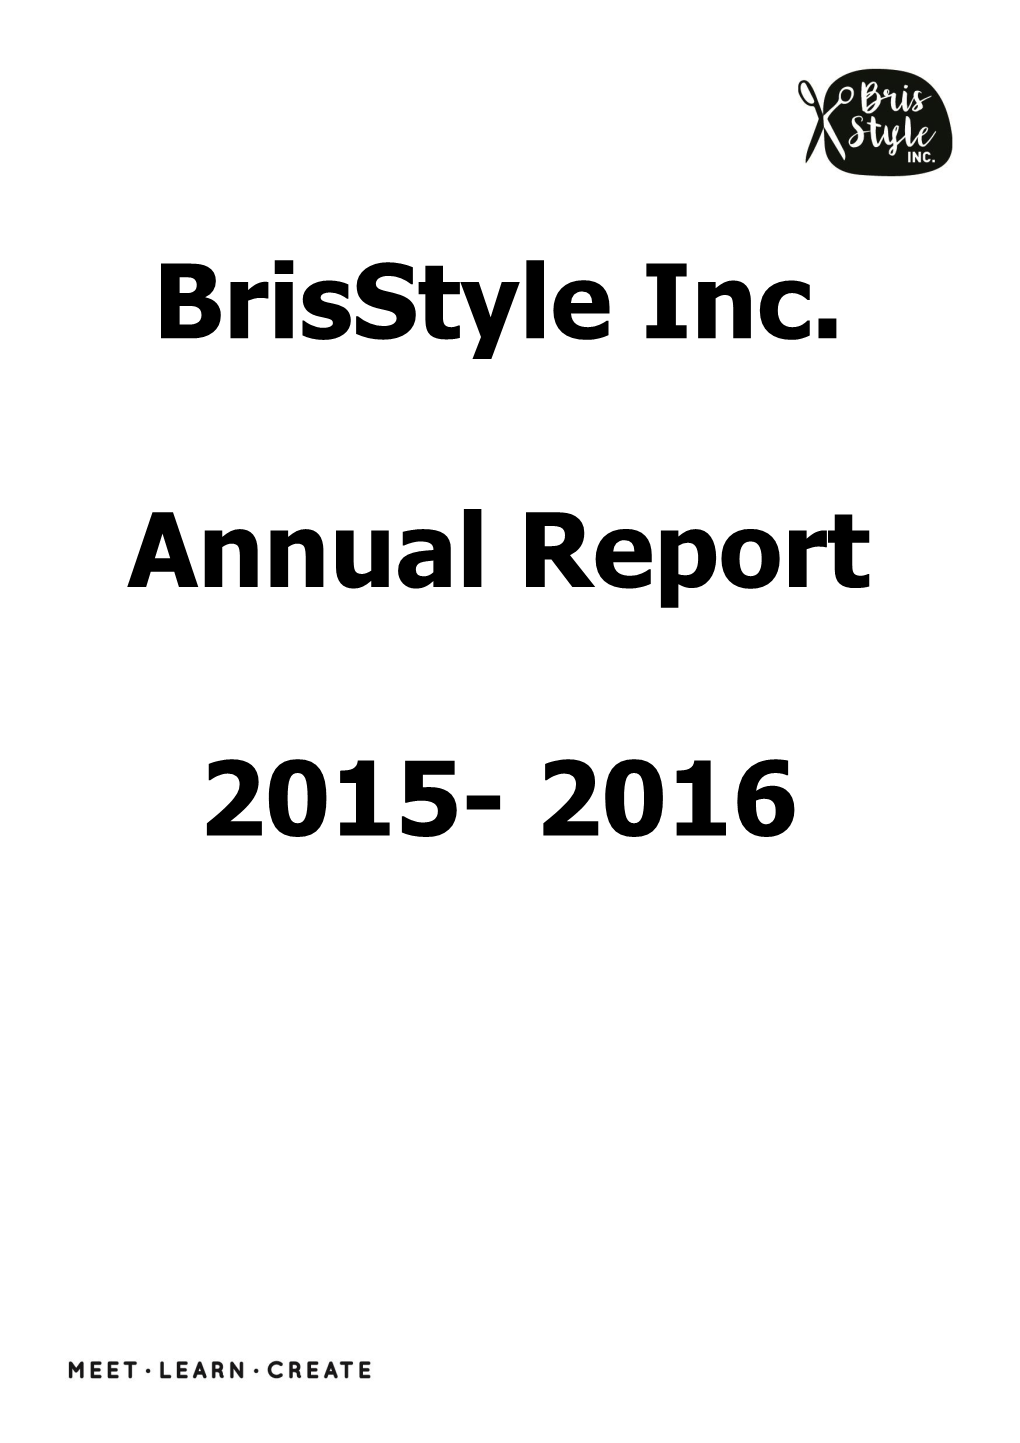 Brisstyle Inc. Annual Report 2015- 2016